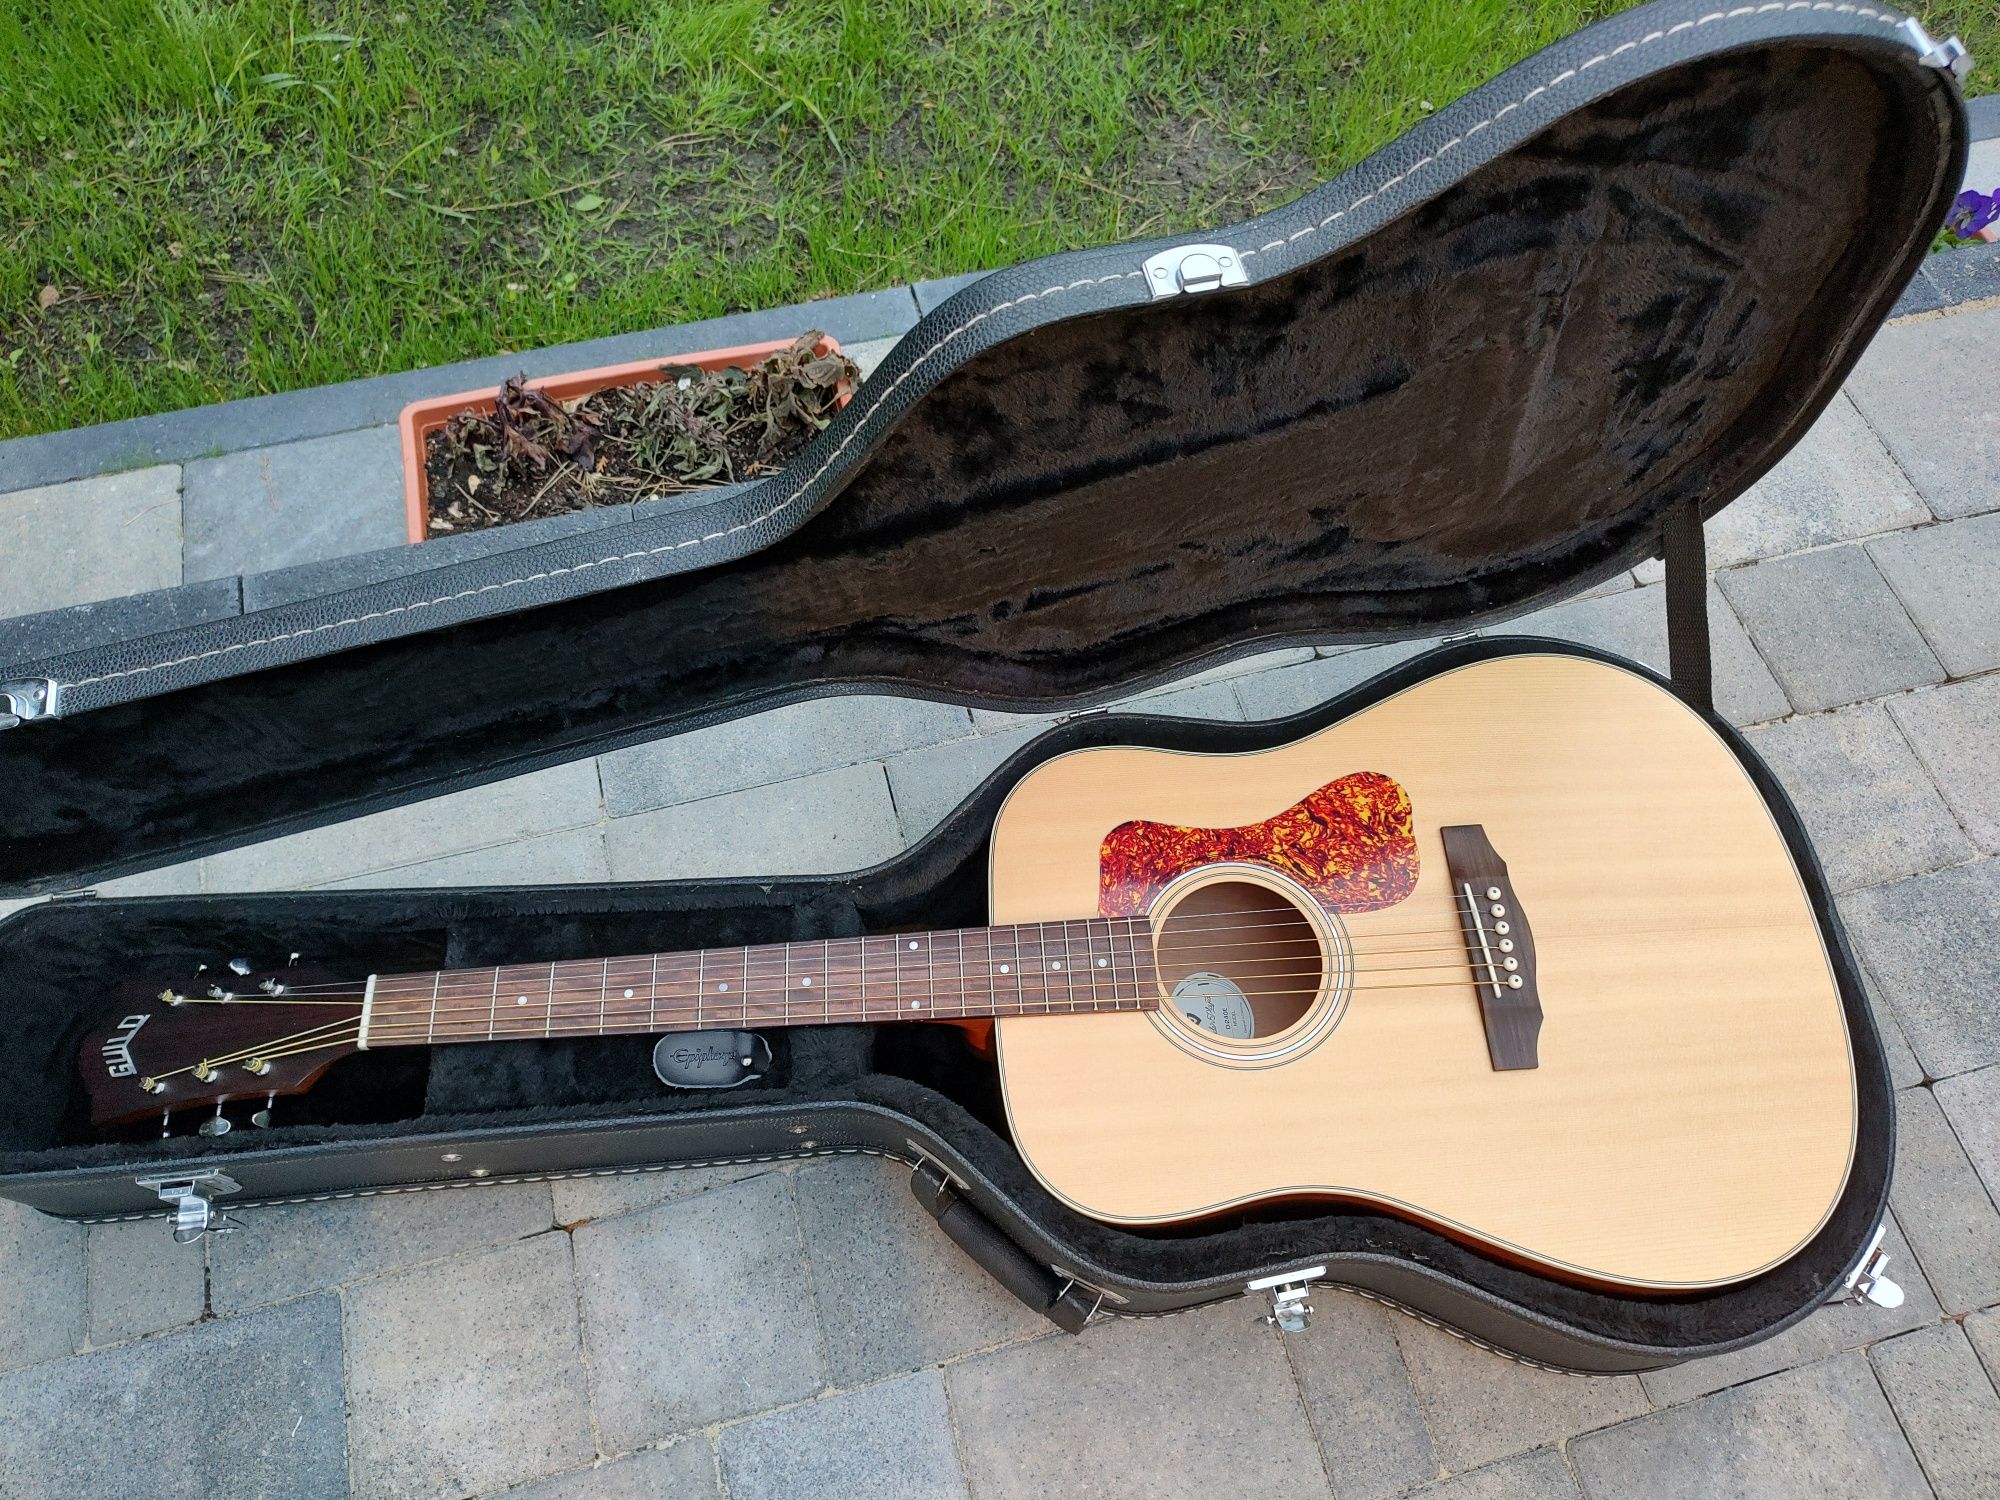 NOWA Guild D-240E gitara elektroakustyczna CASE Fenomenalny instrument